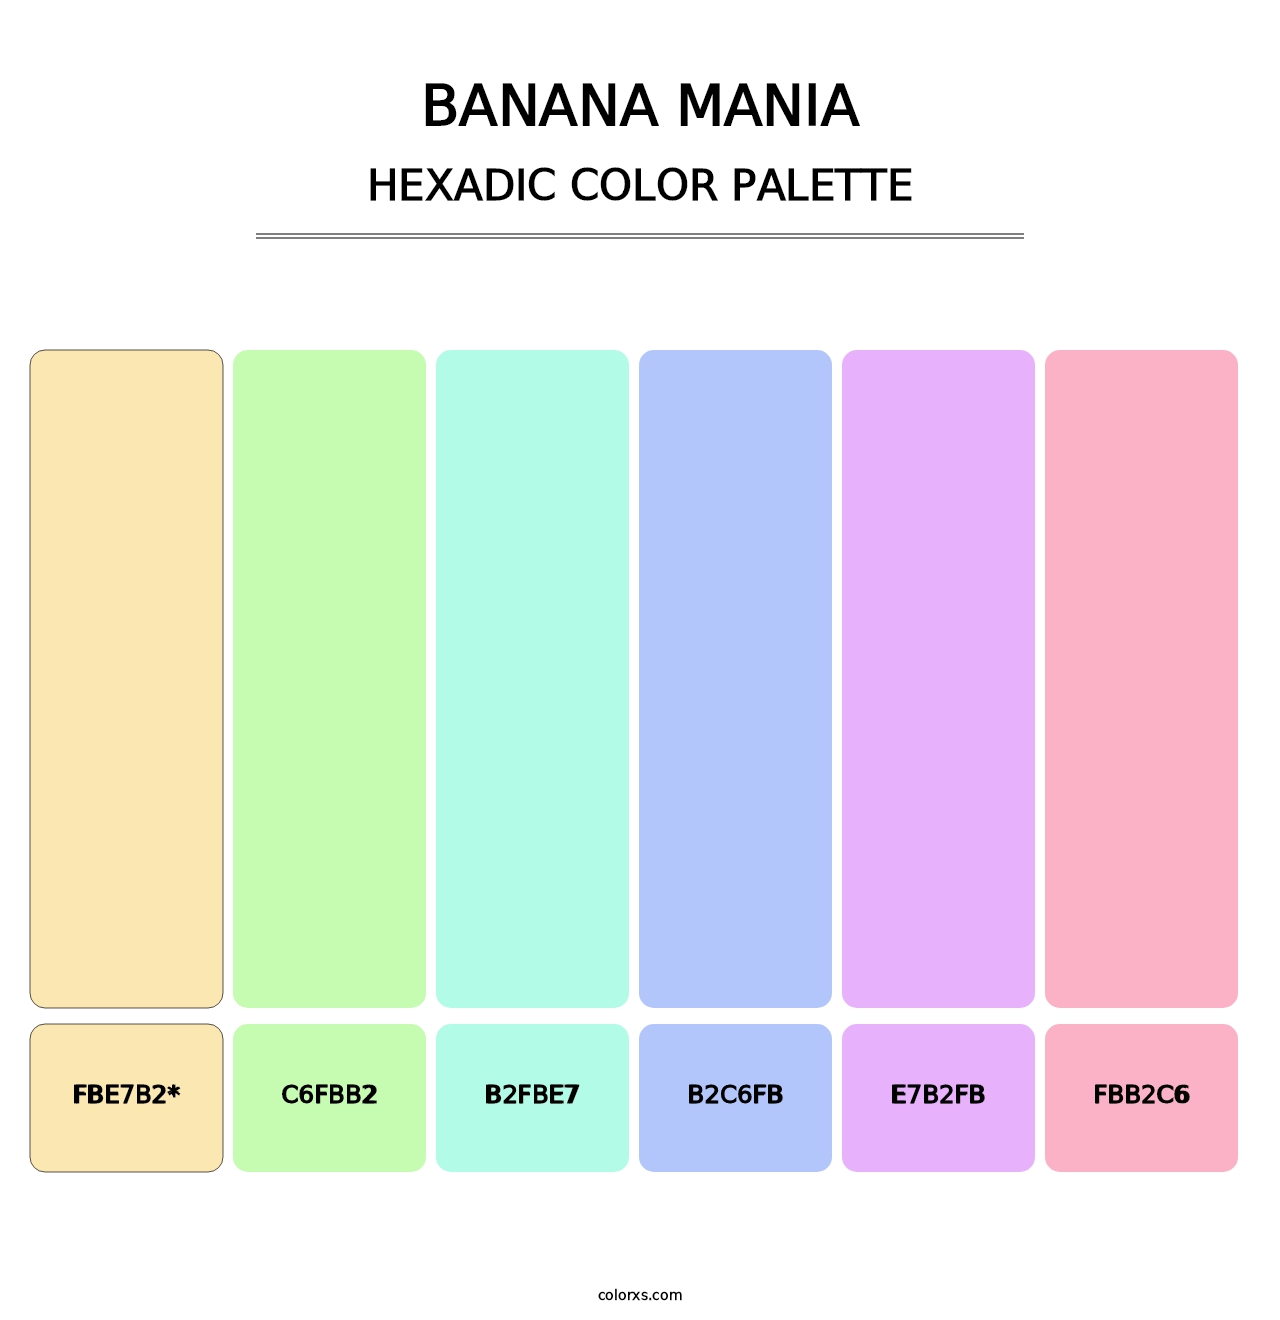 Banana Mania - Hexadic Color Palette